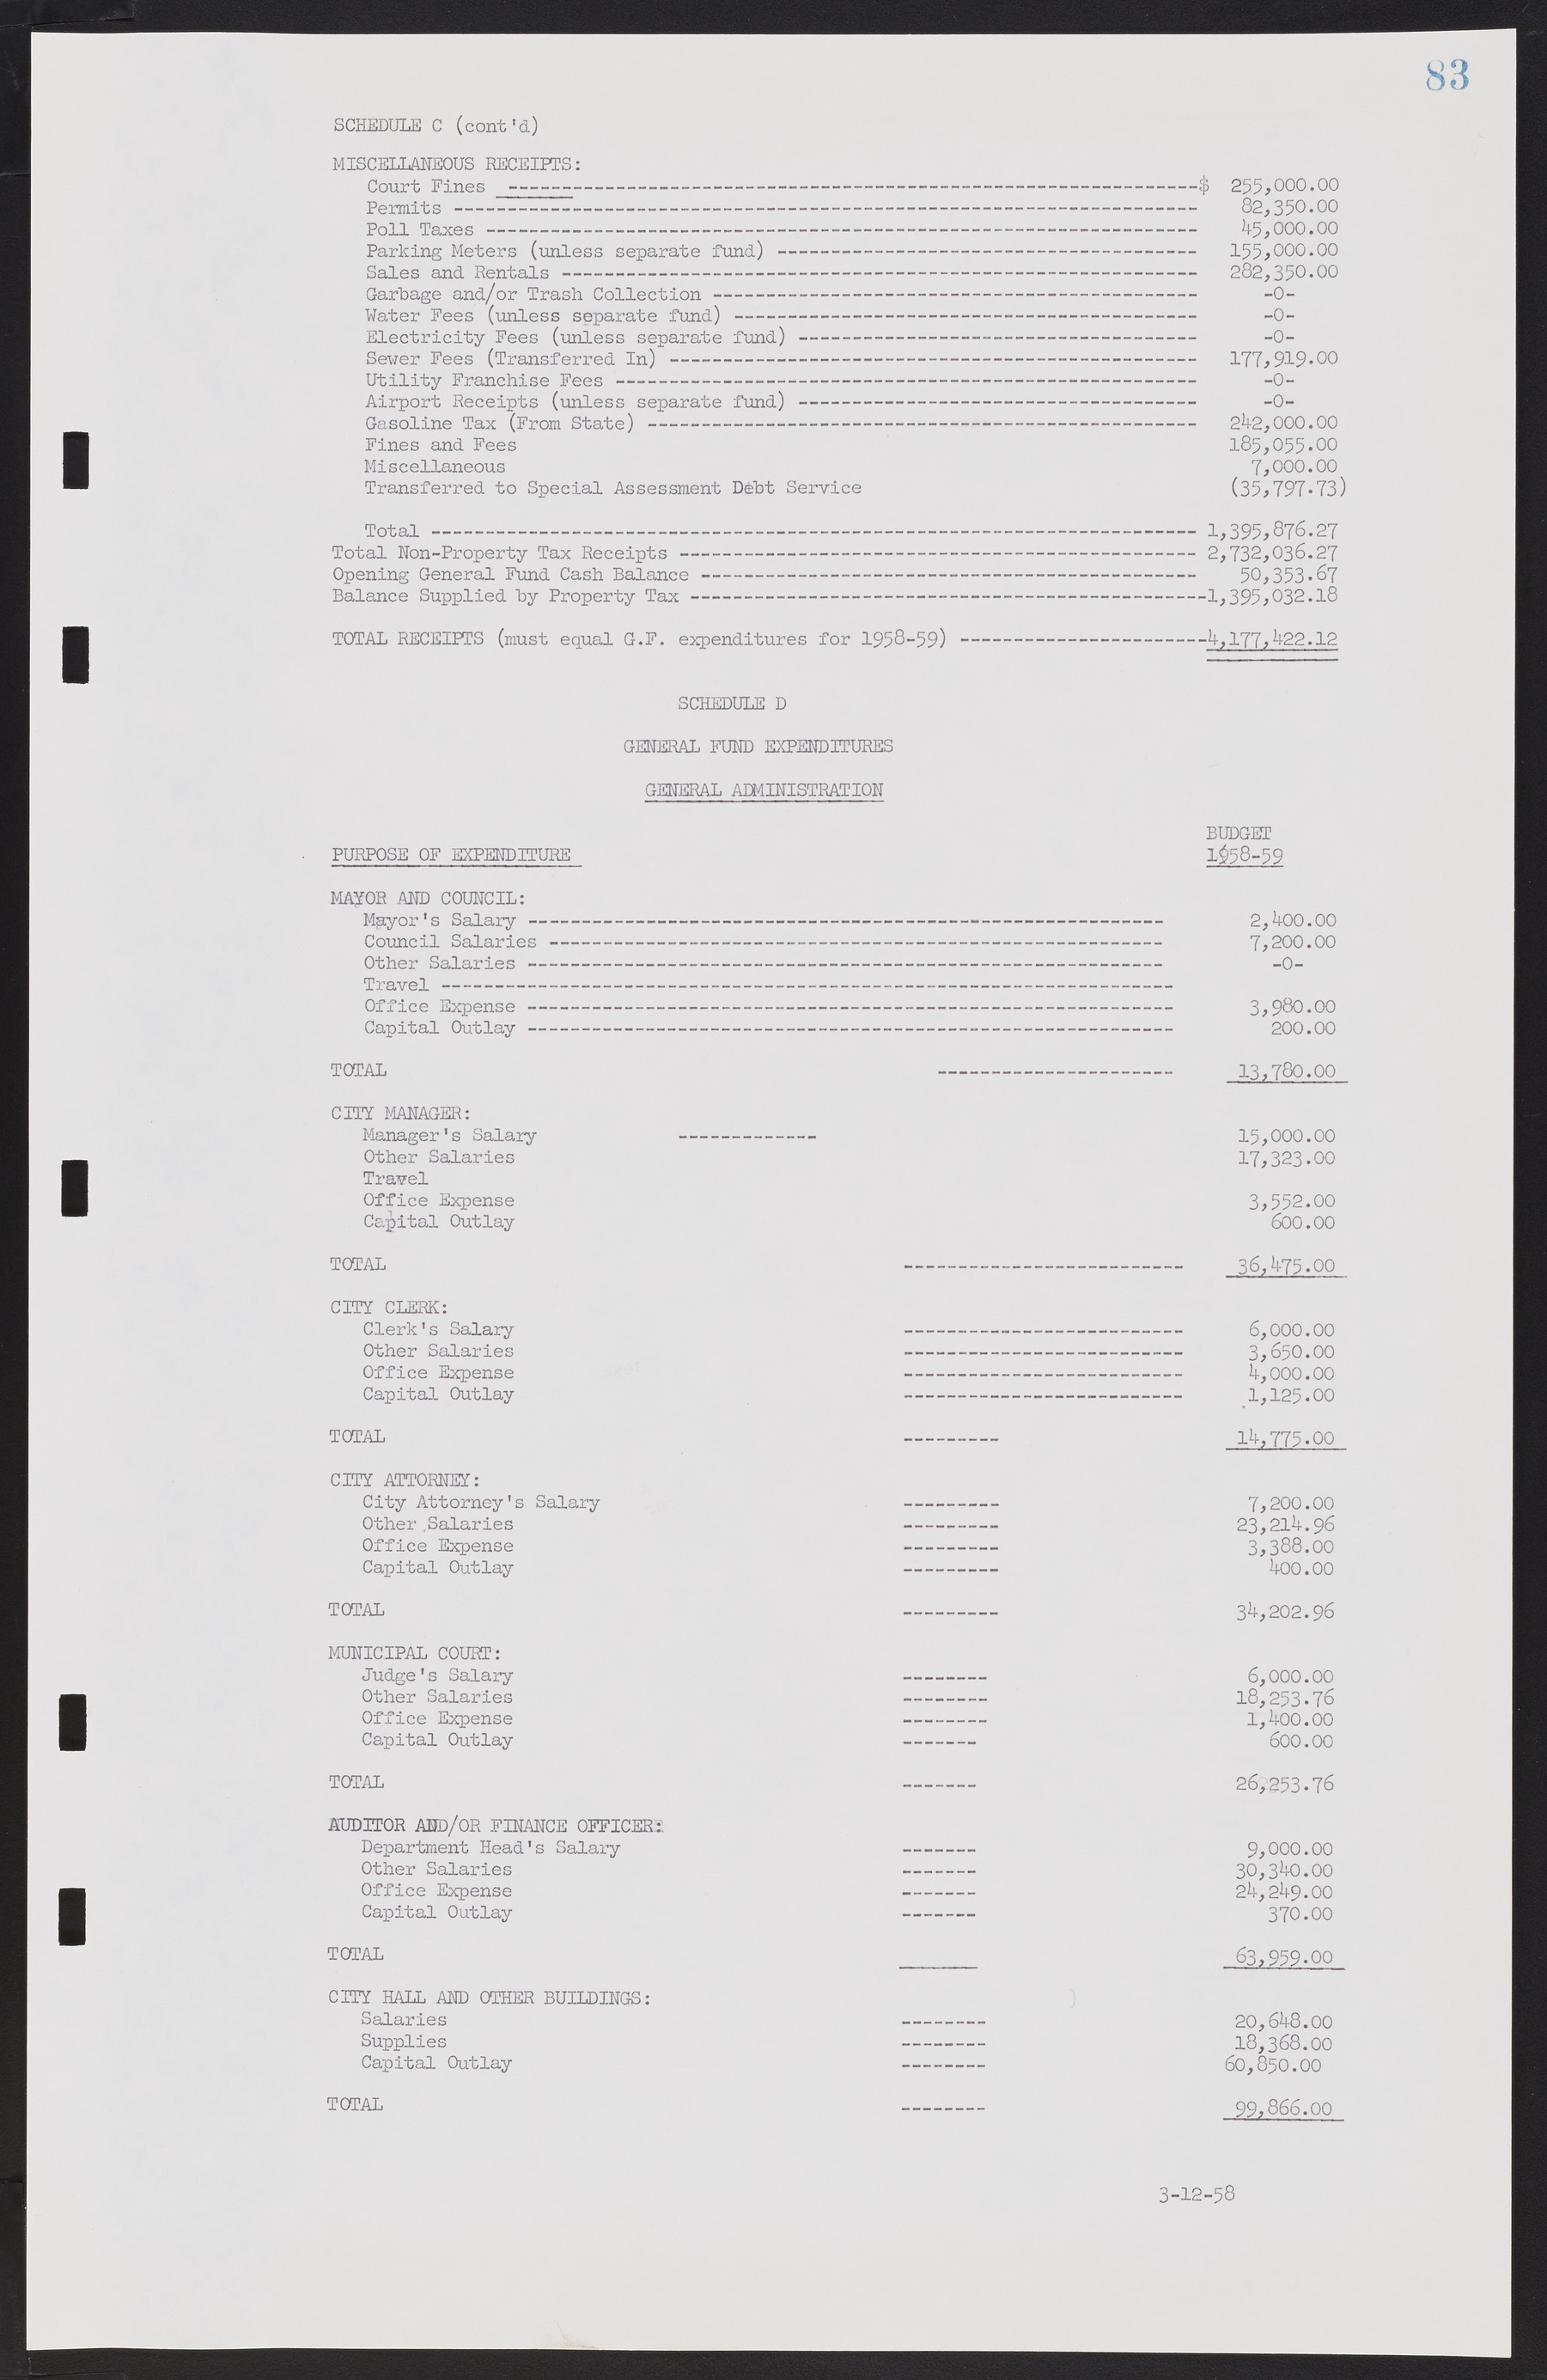 Las Vegas City Commission Minutes, November 20, 1957 to December 2, 1959, lvc000011-87